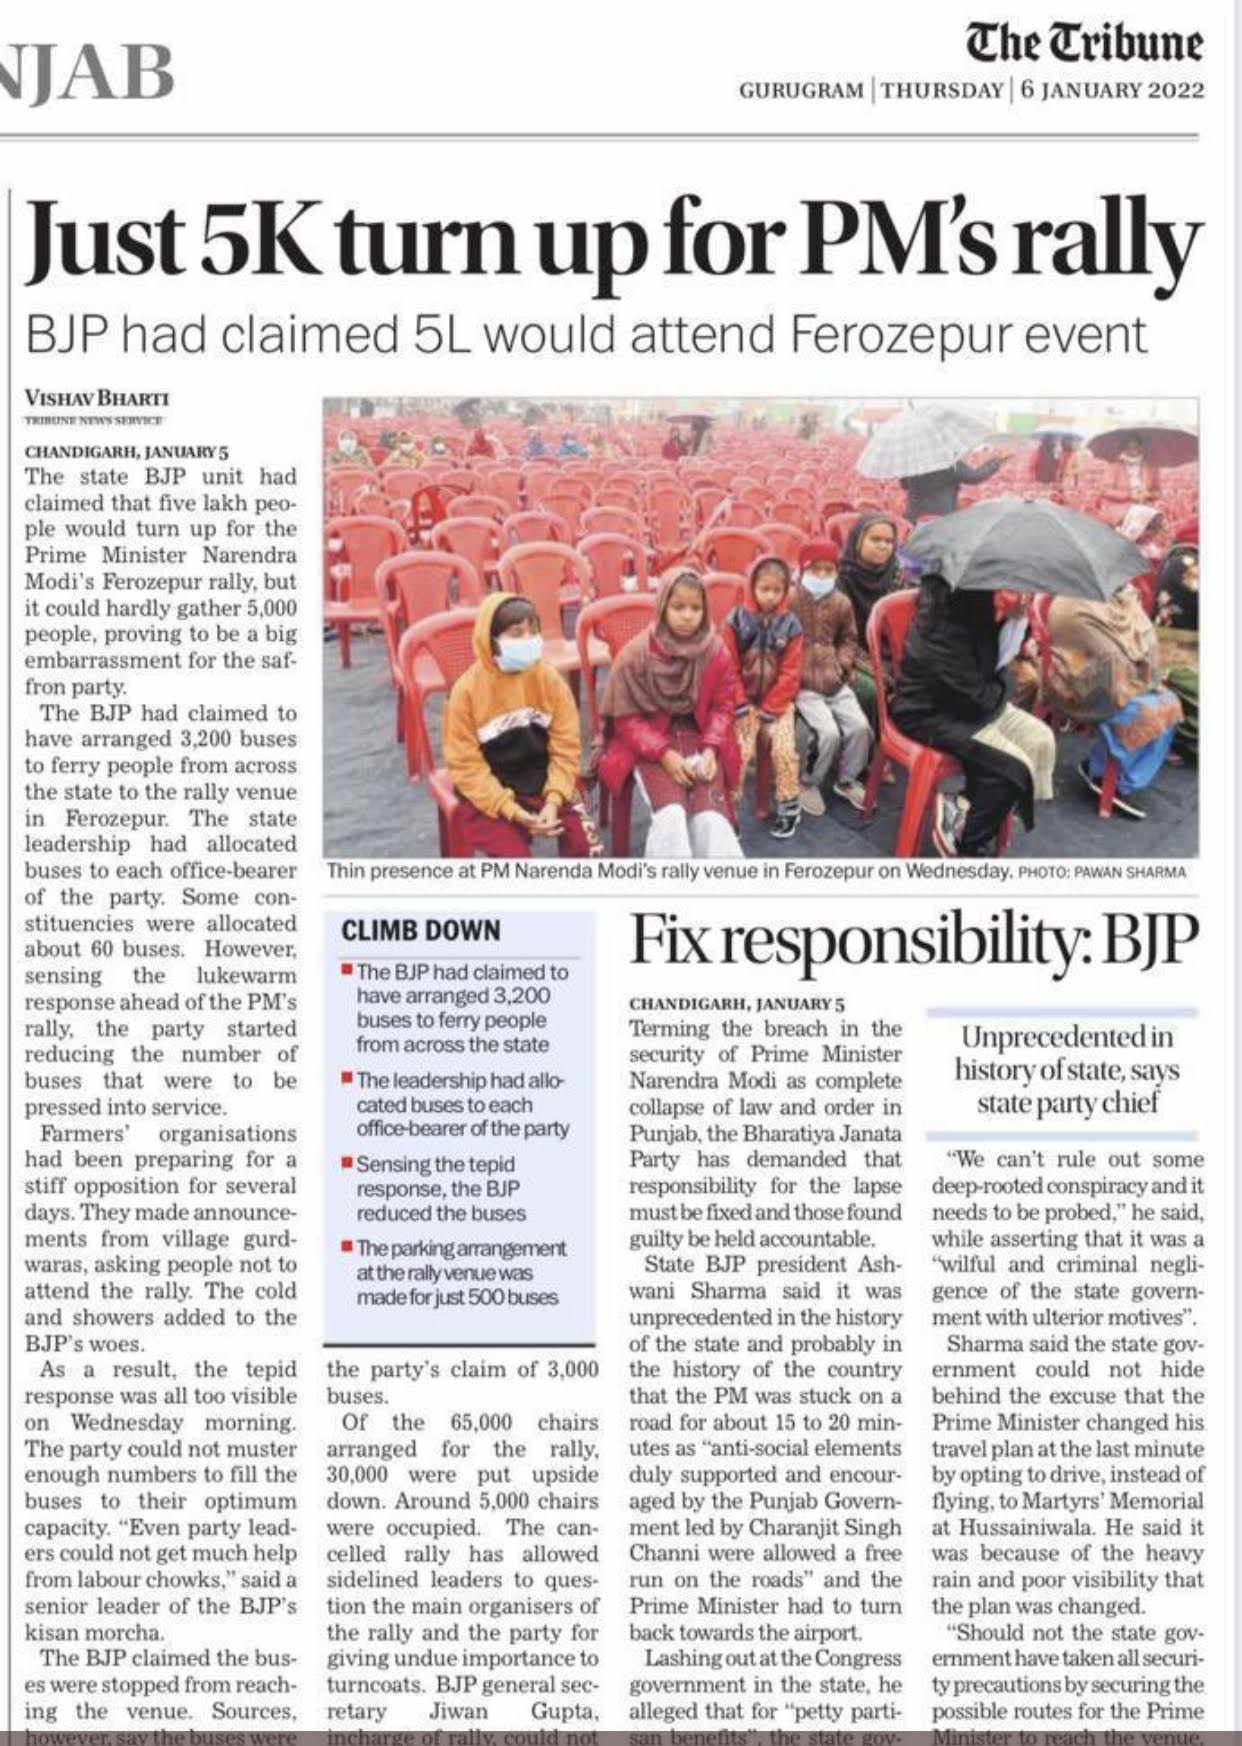 5K people Turn up Modi's Ferozepur rally venue: The Tribune - Satya Hindi